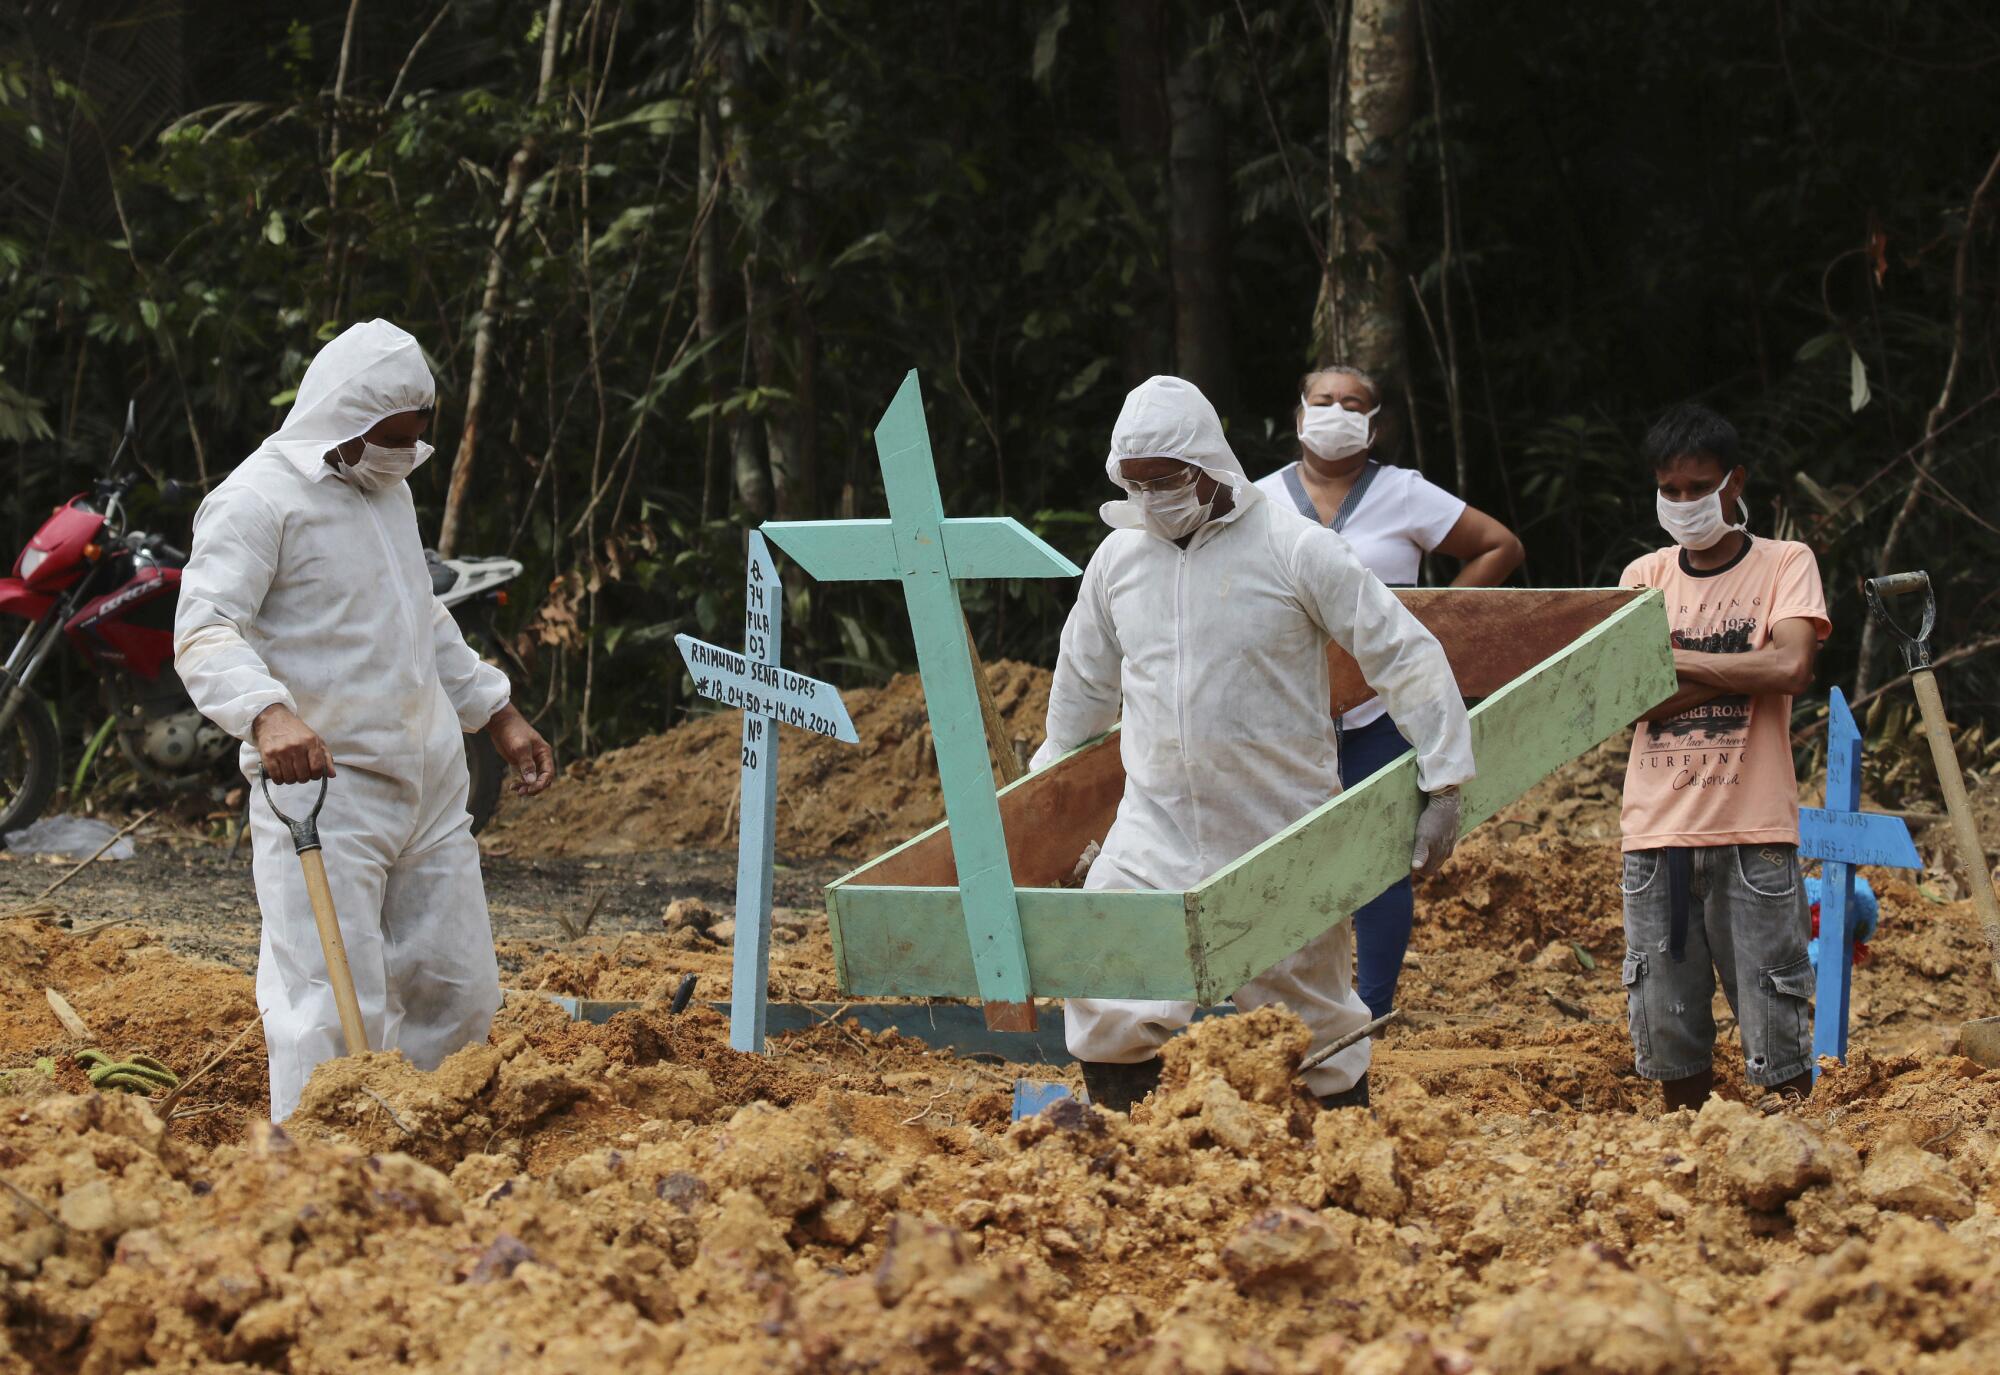 Funeral workers in protective gear prepare a grave for a COVID-19 victim at the Nossa Senhora Aparecida cemetery in Brazil.